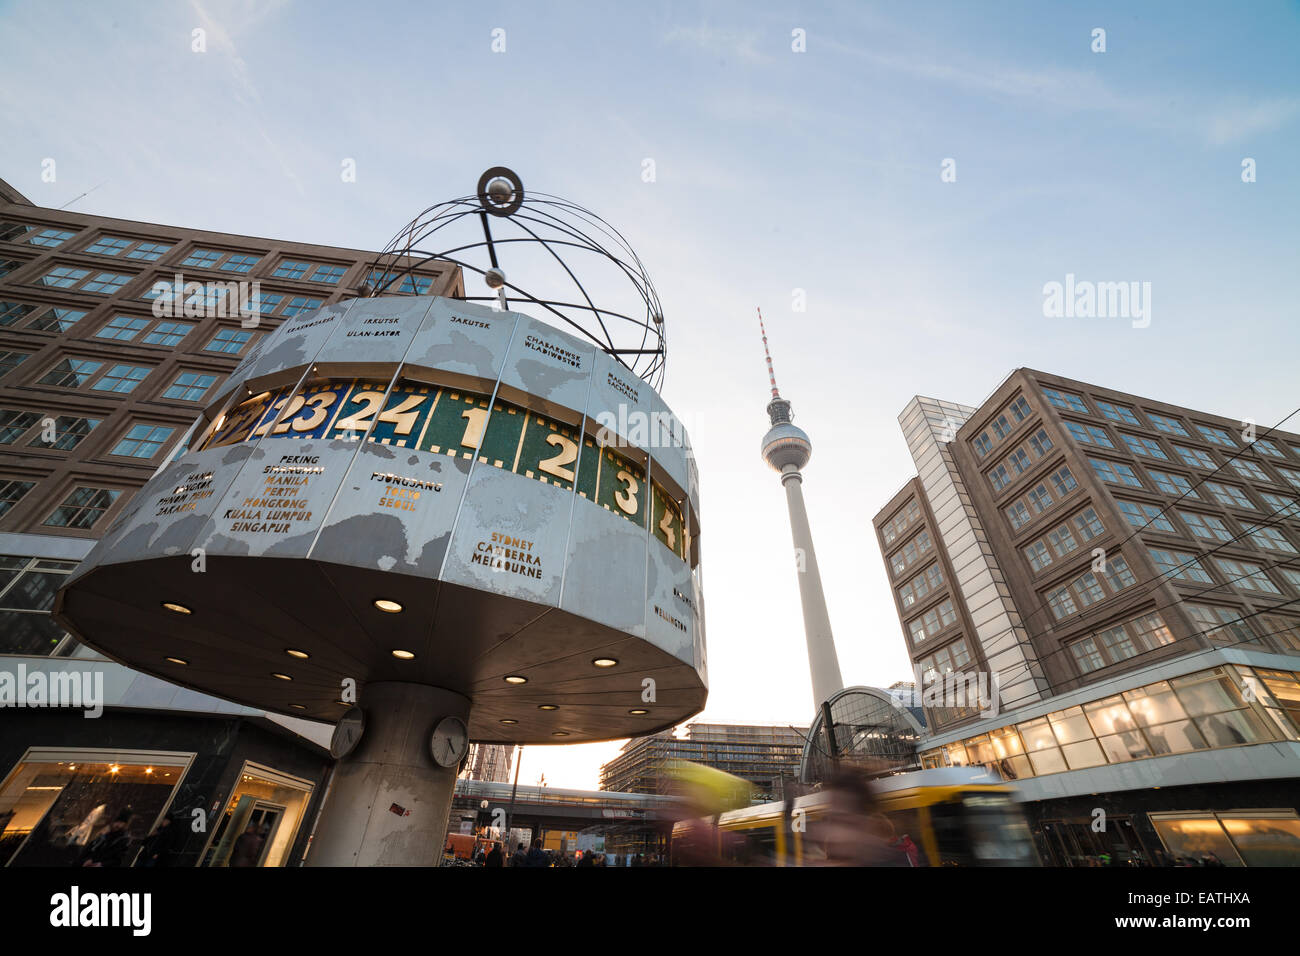 berlin alexanderplatz with world clock, television tower, tram Stock Photo